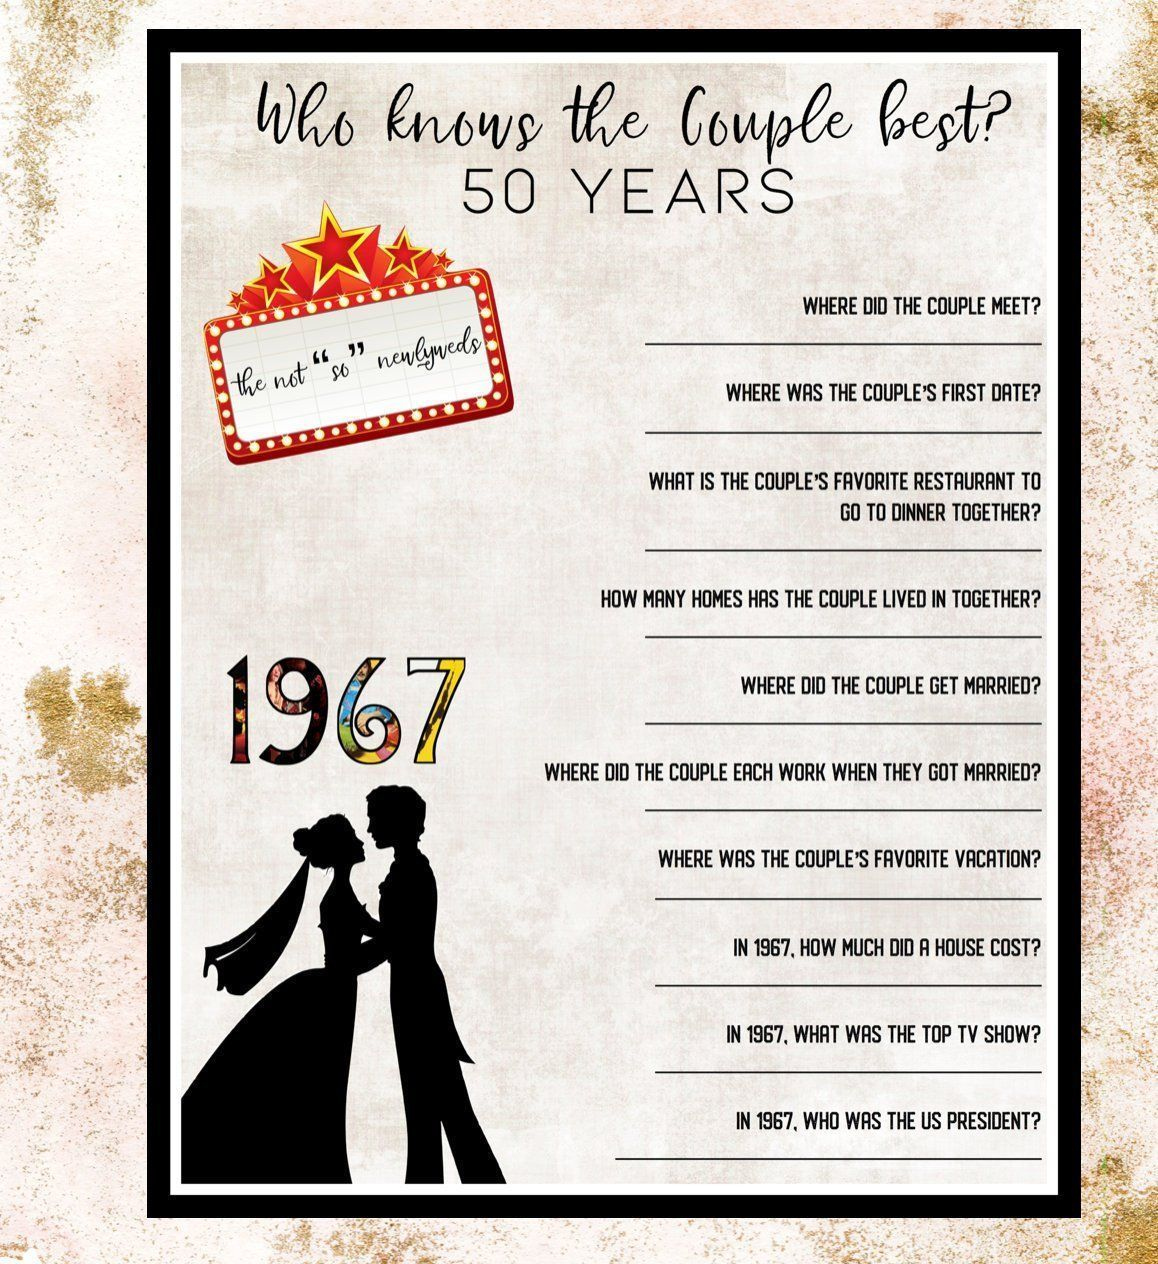 50th Wedding Anniversary Trivia Game Trivia Questions 1969 